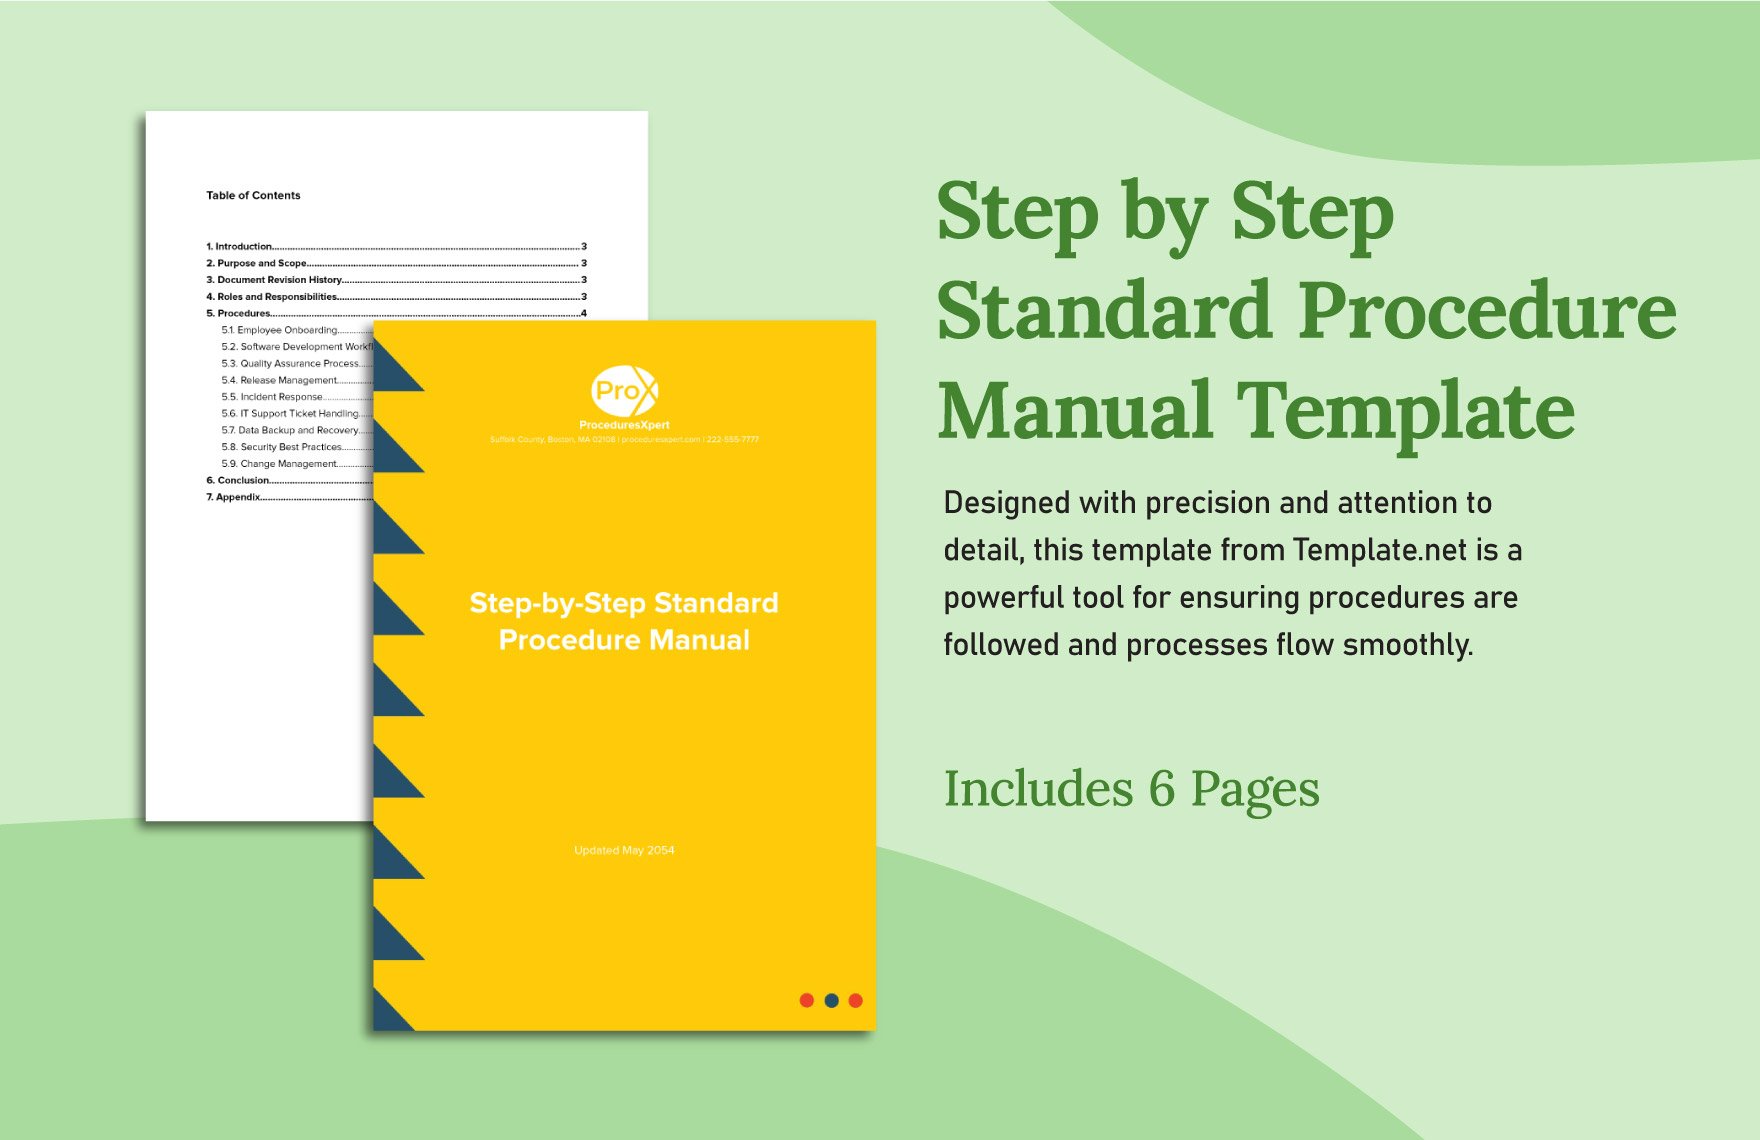 Step by Step Standard Procedure Manual Template